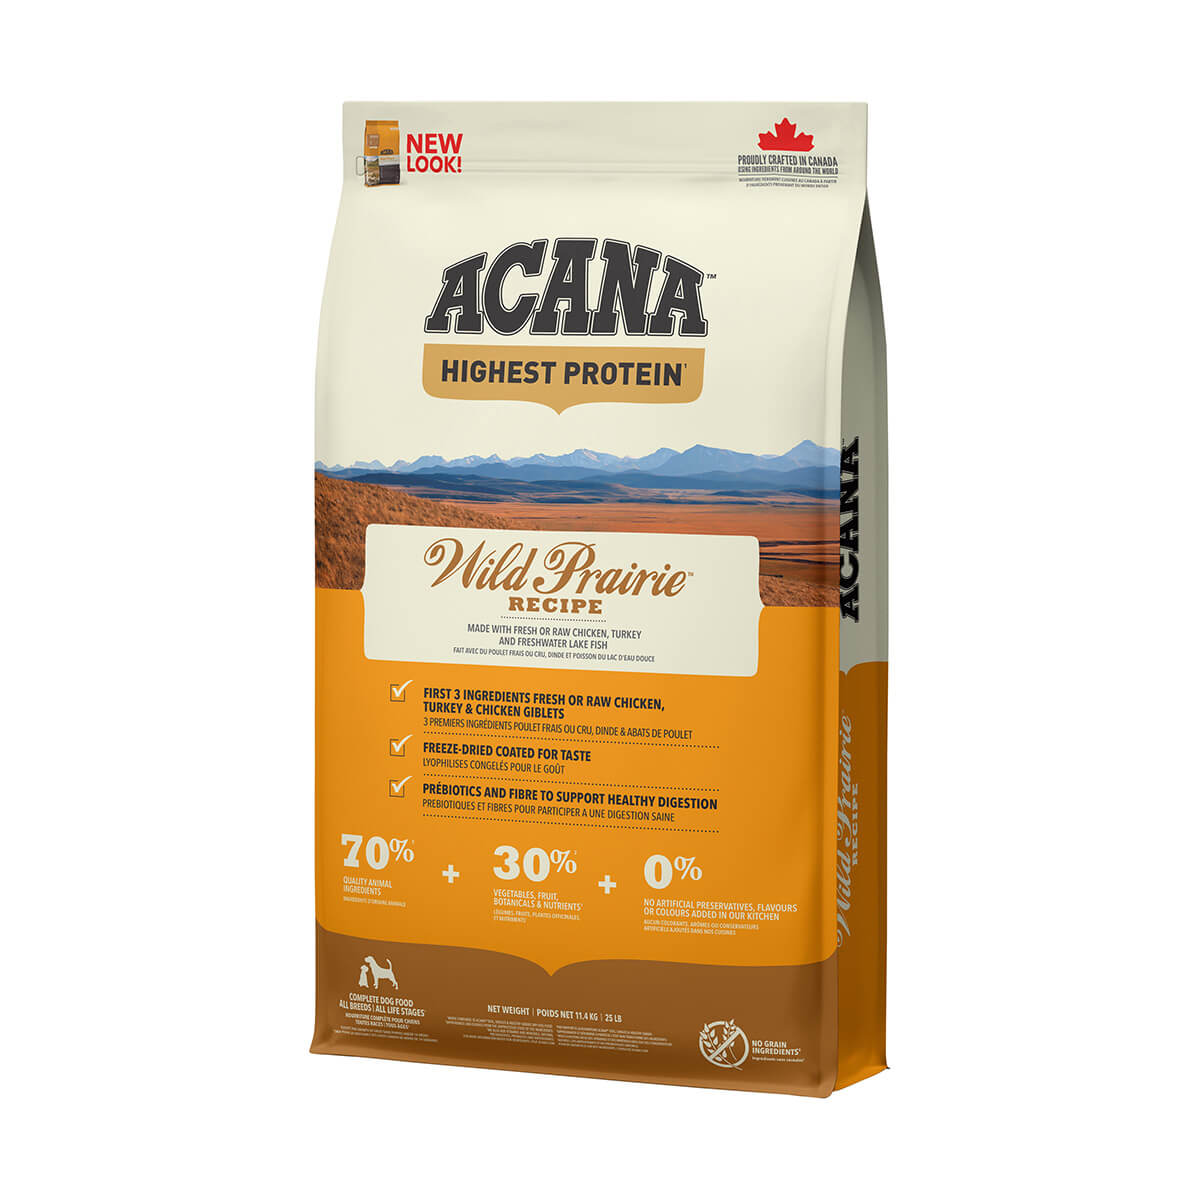 Acana Wild Prairie Dog Food - 11.4 kg